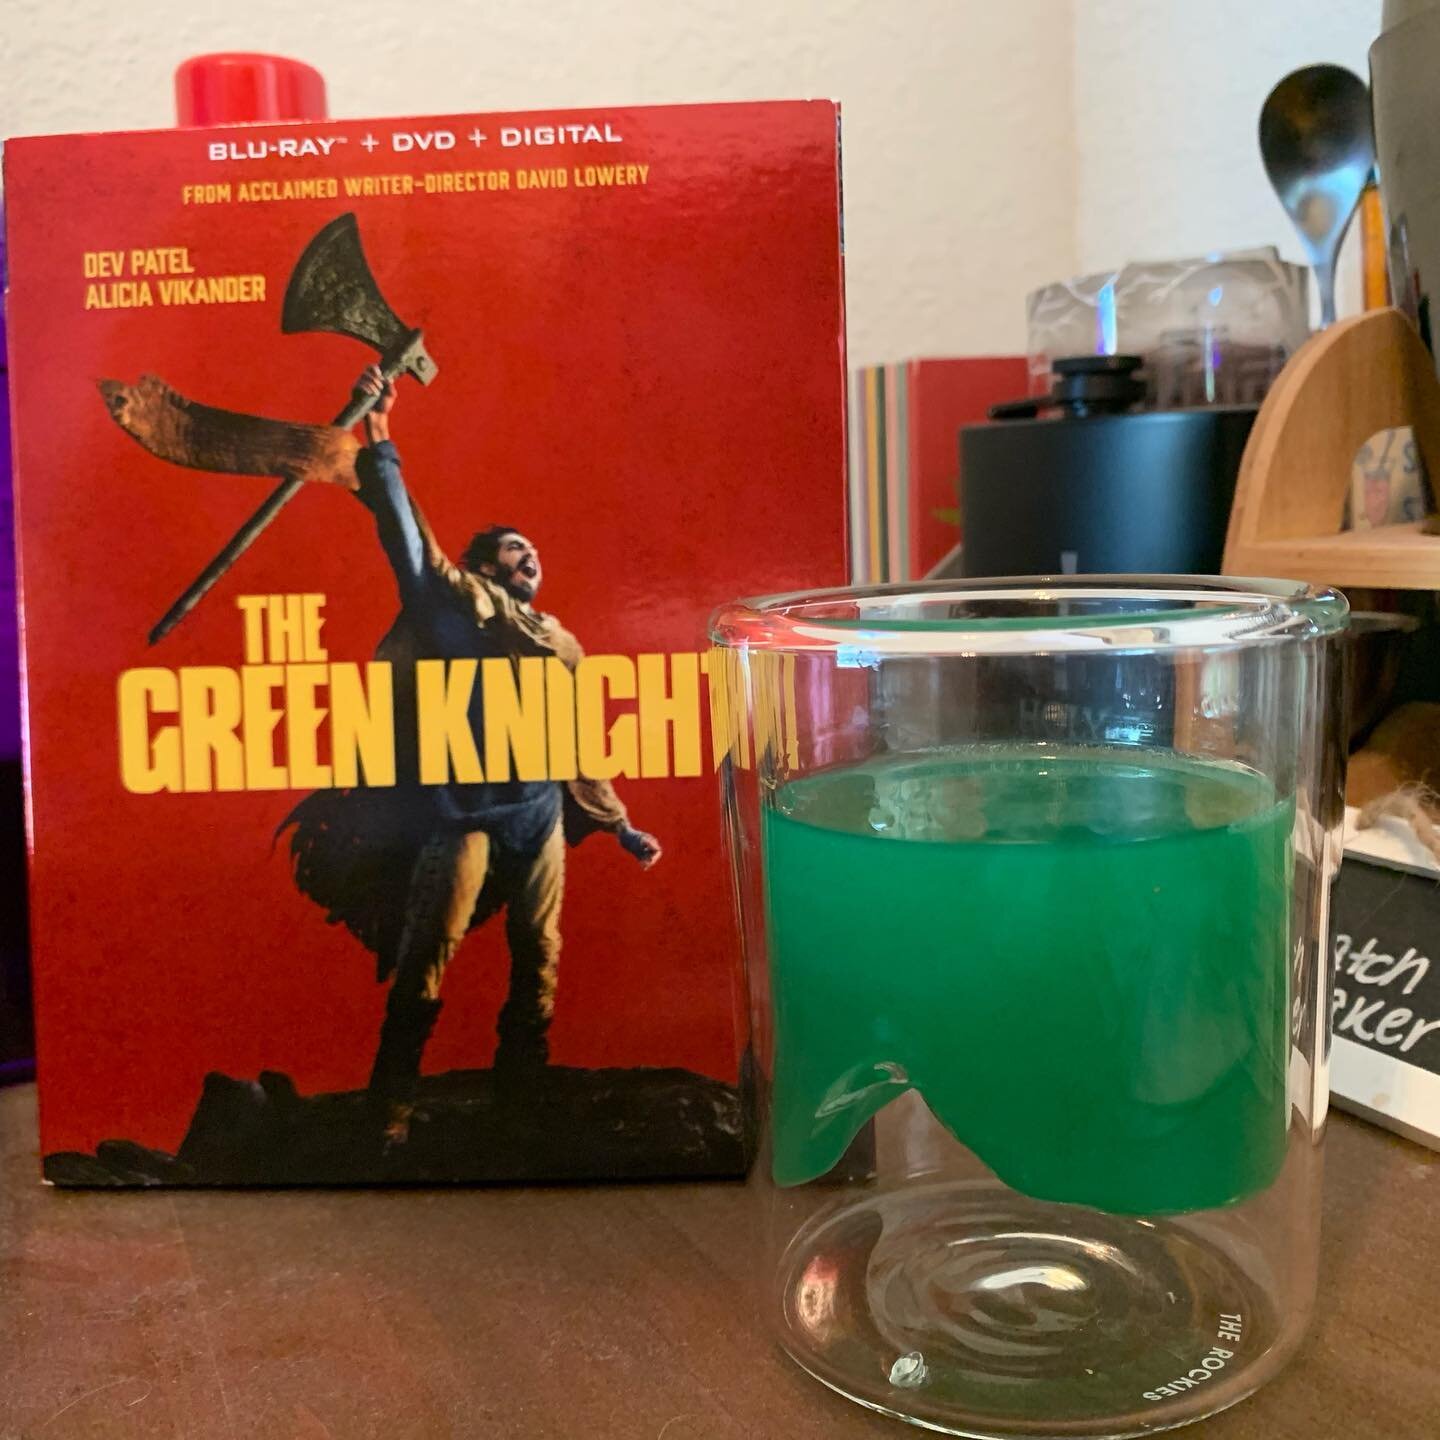 The Green Knight and an Excalibur

&bull;2oz vanilla rum
&bull;1.5oz absinthe
&bull;.5oz elderflower liquer